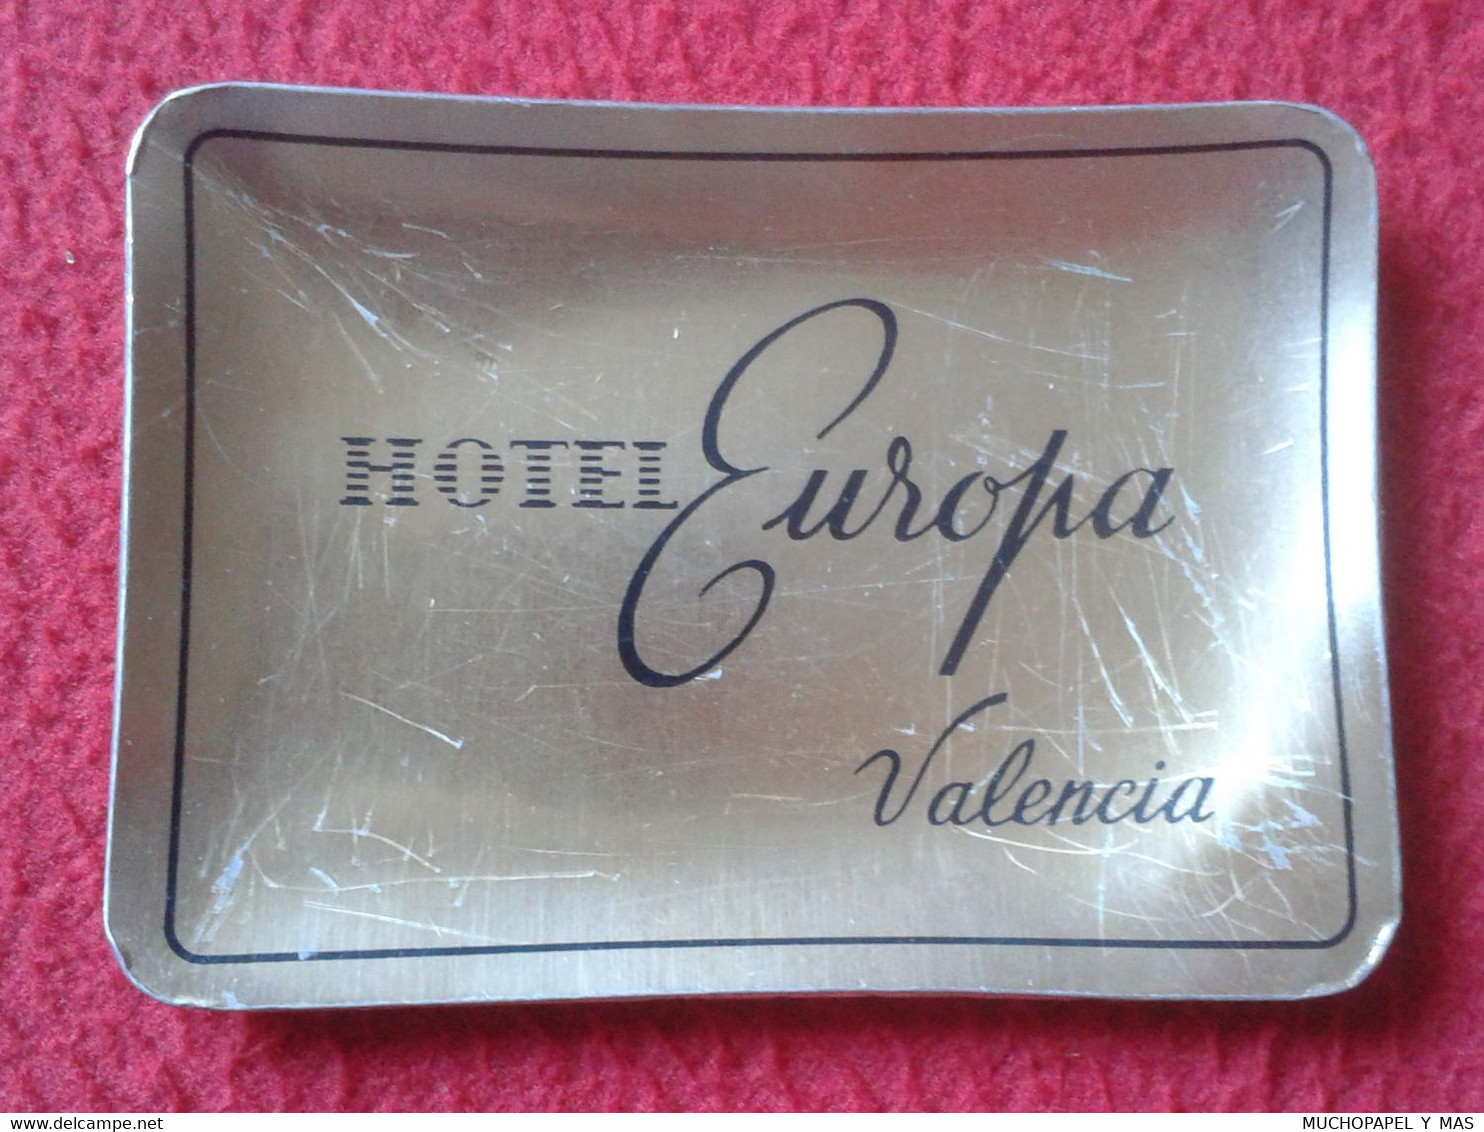 ANTIGUO CENICERO ASHTRAY CENDRIER HOTEL EUROPA VALENCIA ESPAÑA SPAIN MATERIAL TIPO ALUMINIO O SIMIL ASCHENBECHER ESPAGNE - Metallo